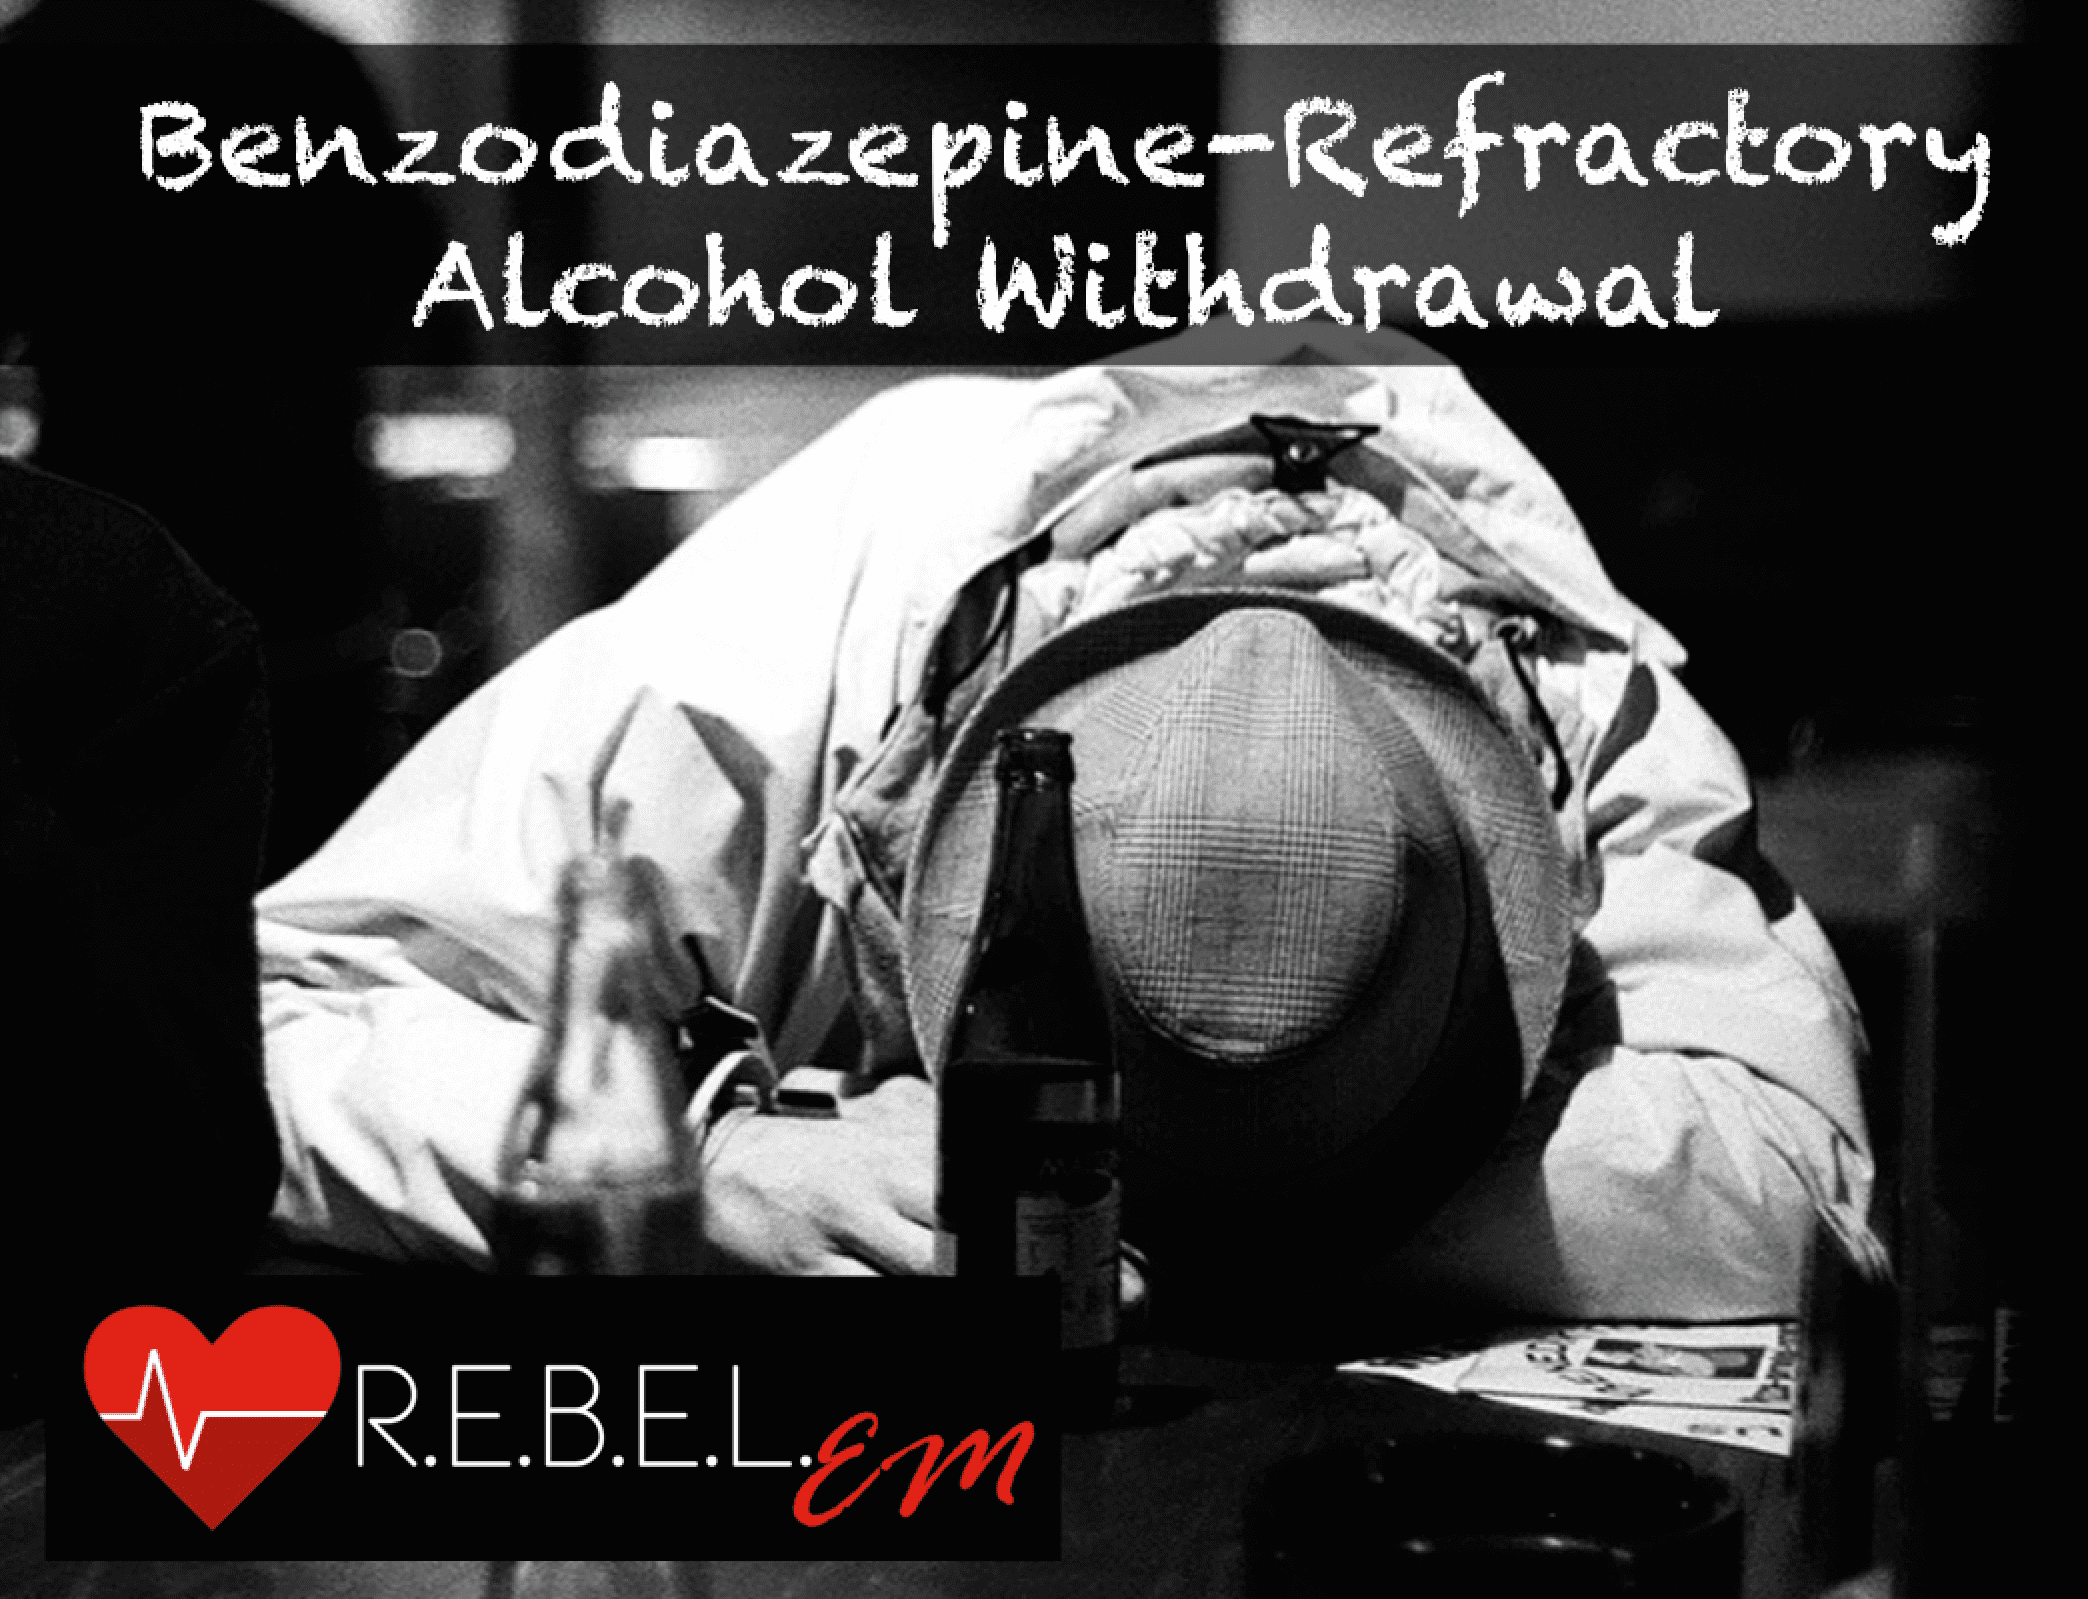 benzodiazepine-refractory-alcohol-withdrawal-rebel-em-emergency-medicine-blog